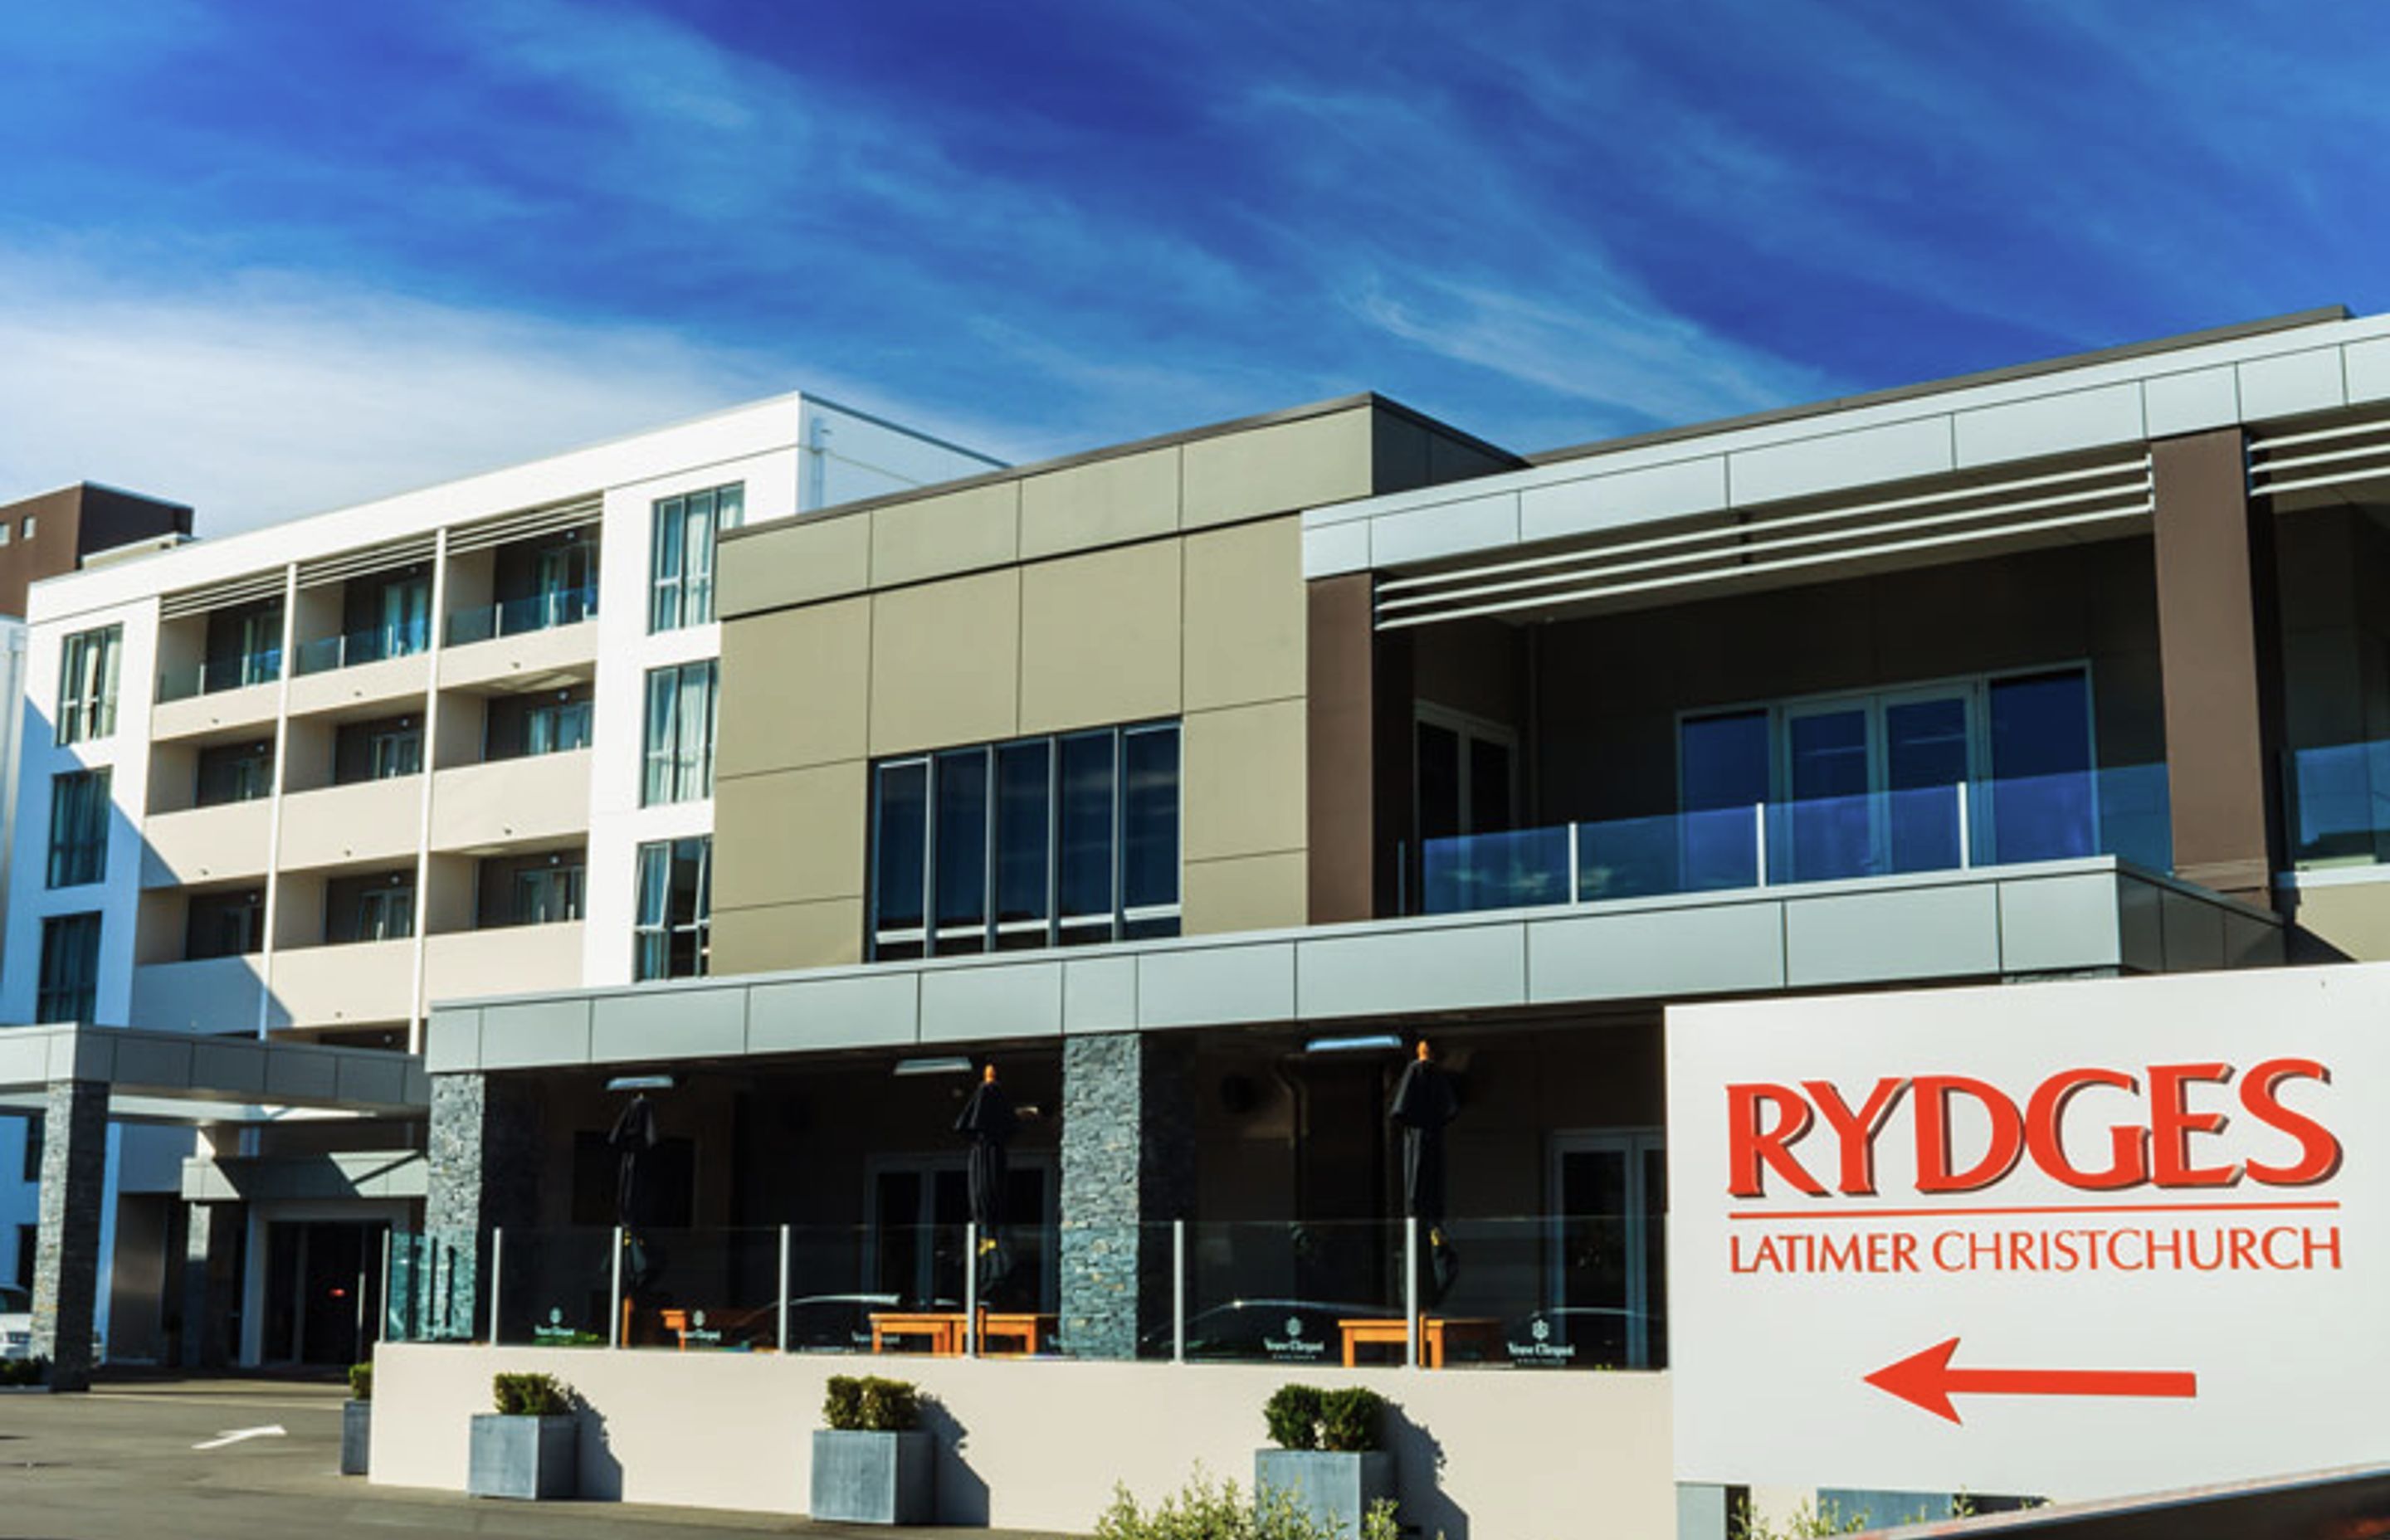 Rydges Hotel Latimer - Christchurch